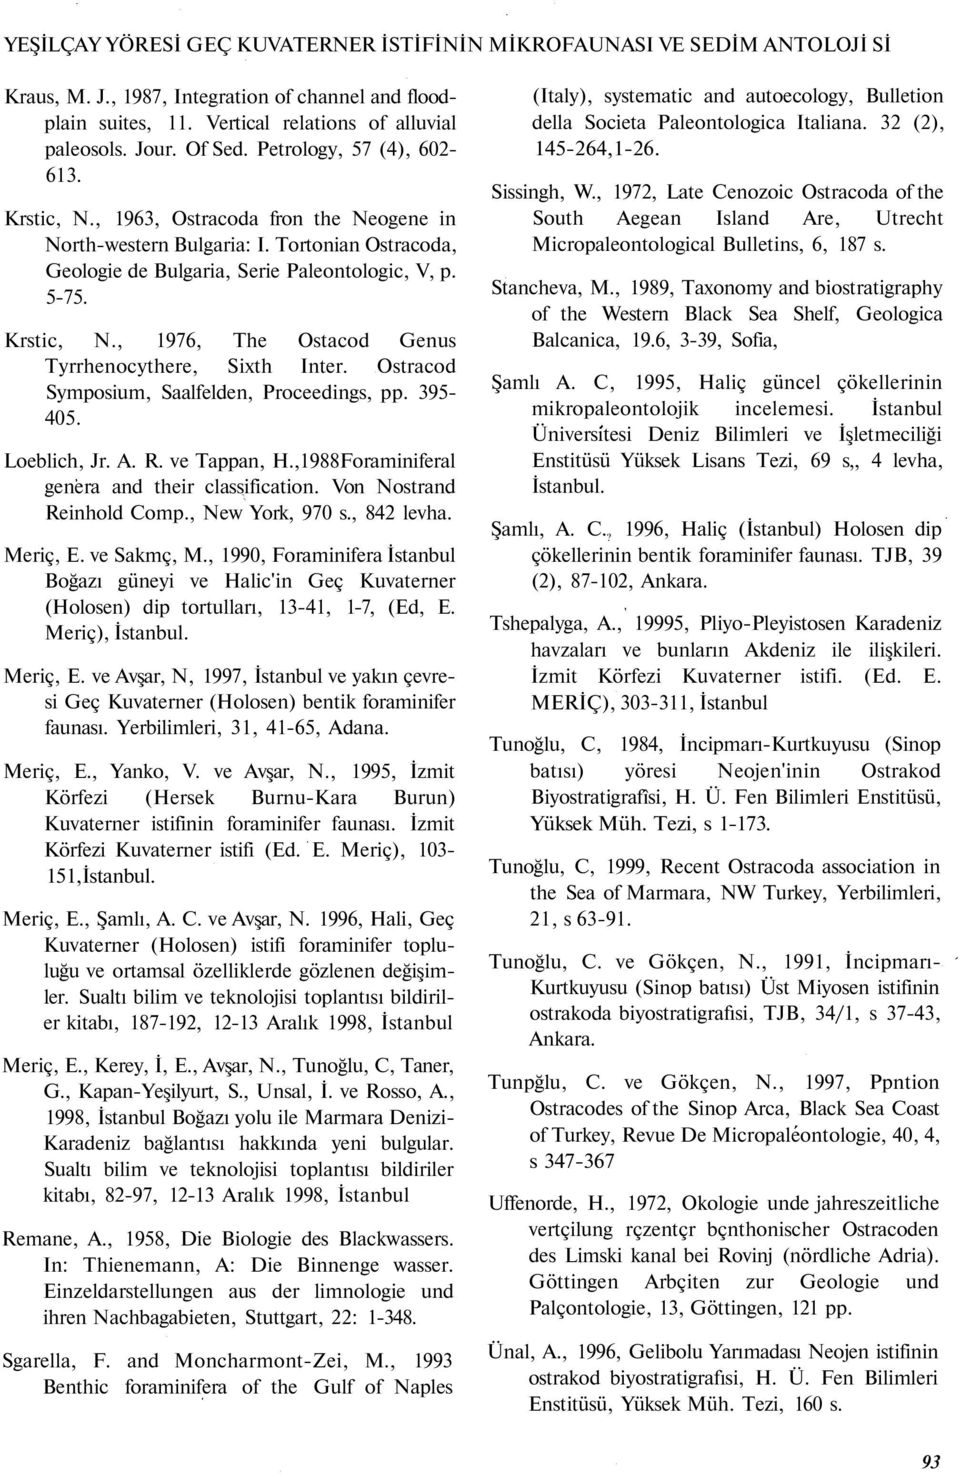 Ostracod Symposium, Saalfelden, Proceedings, pp. 395-405. Loeblich, Jr. A. R. ve Tappan, H.,1988Foraminiferal genera and their classification. Von Nostrand Reinhold Comp., New York, 970 s., 842 levha.